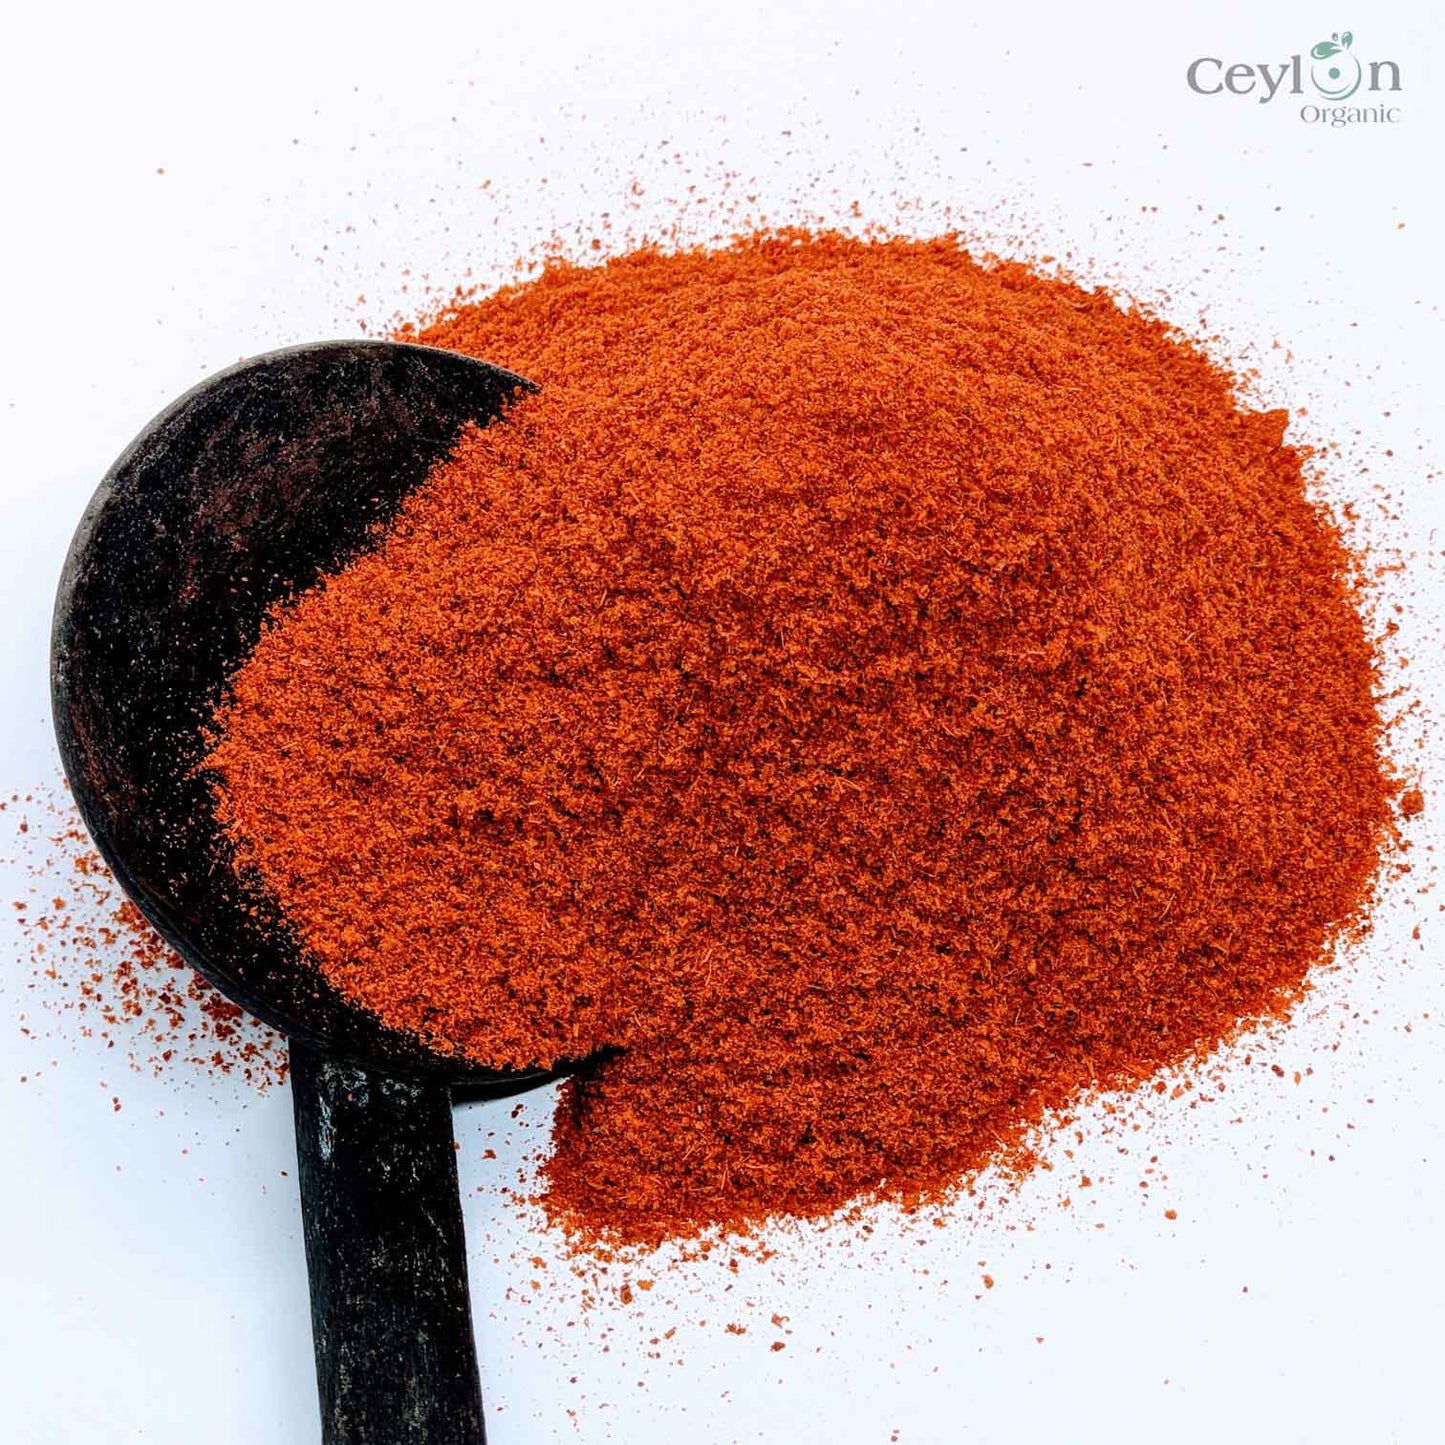 500g+ Ceylon Chilli Powder 100% Organic Natural Premium Sri Lankan Quality | Ceylon Organic-2